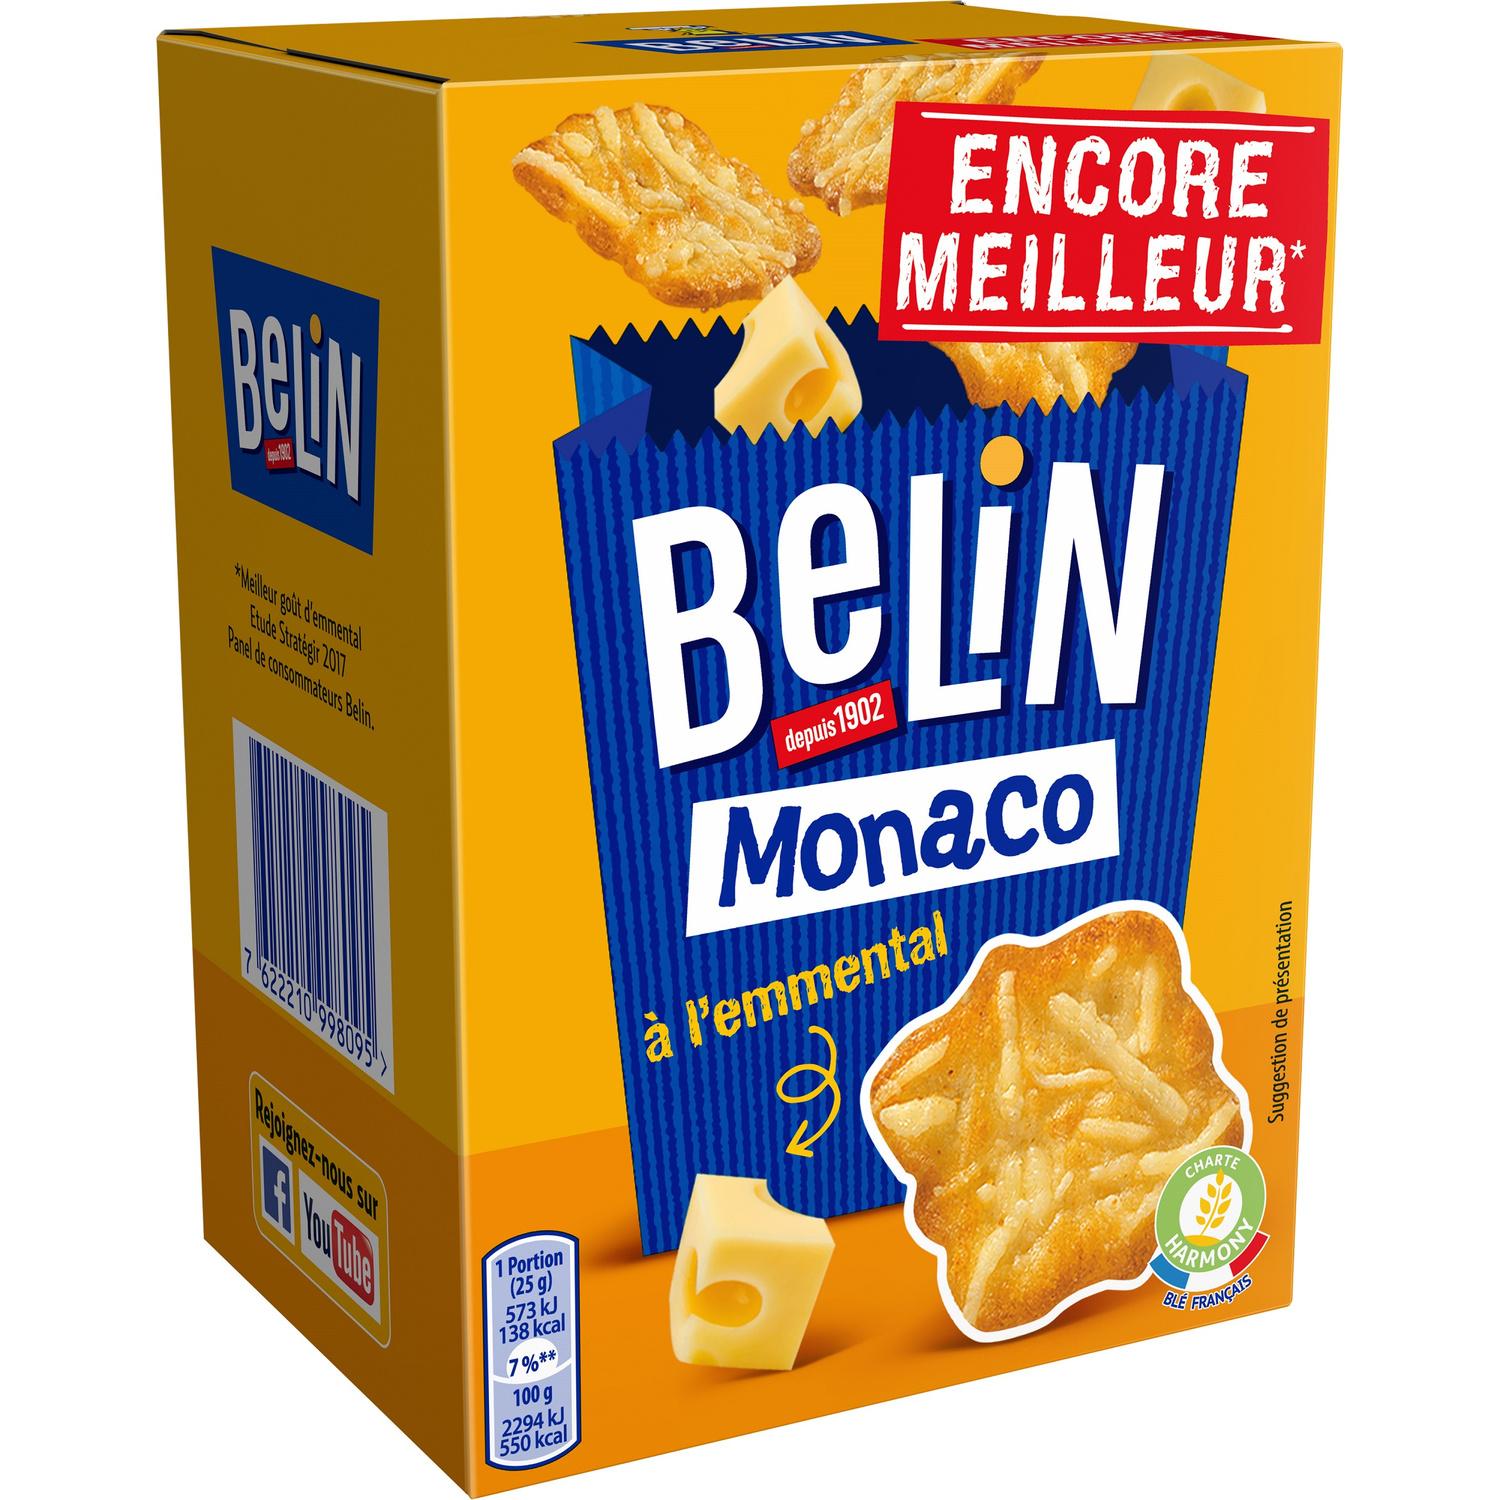 https://my-french-grocery.com/wp-content/uploads/2018/09/belin-monaco.jpg